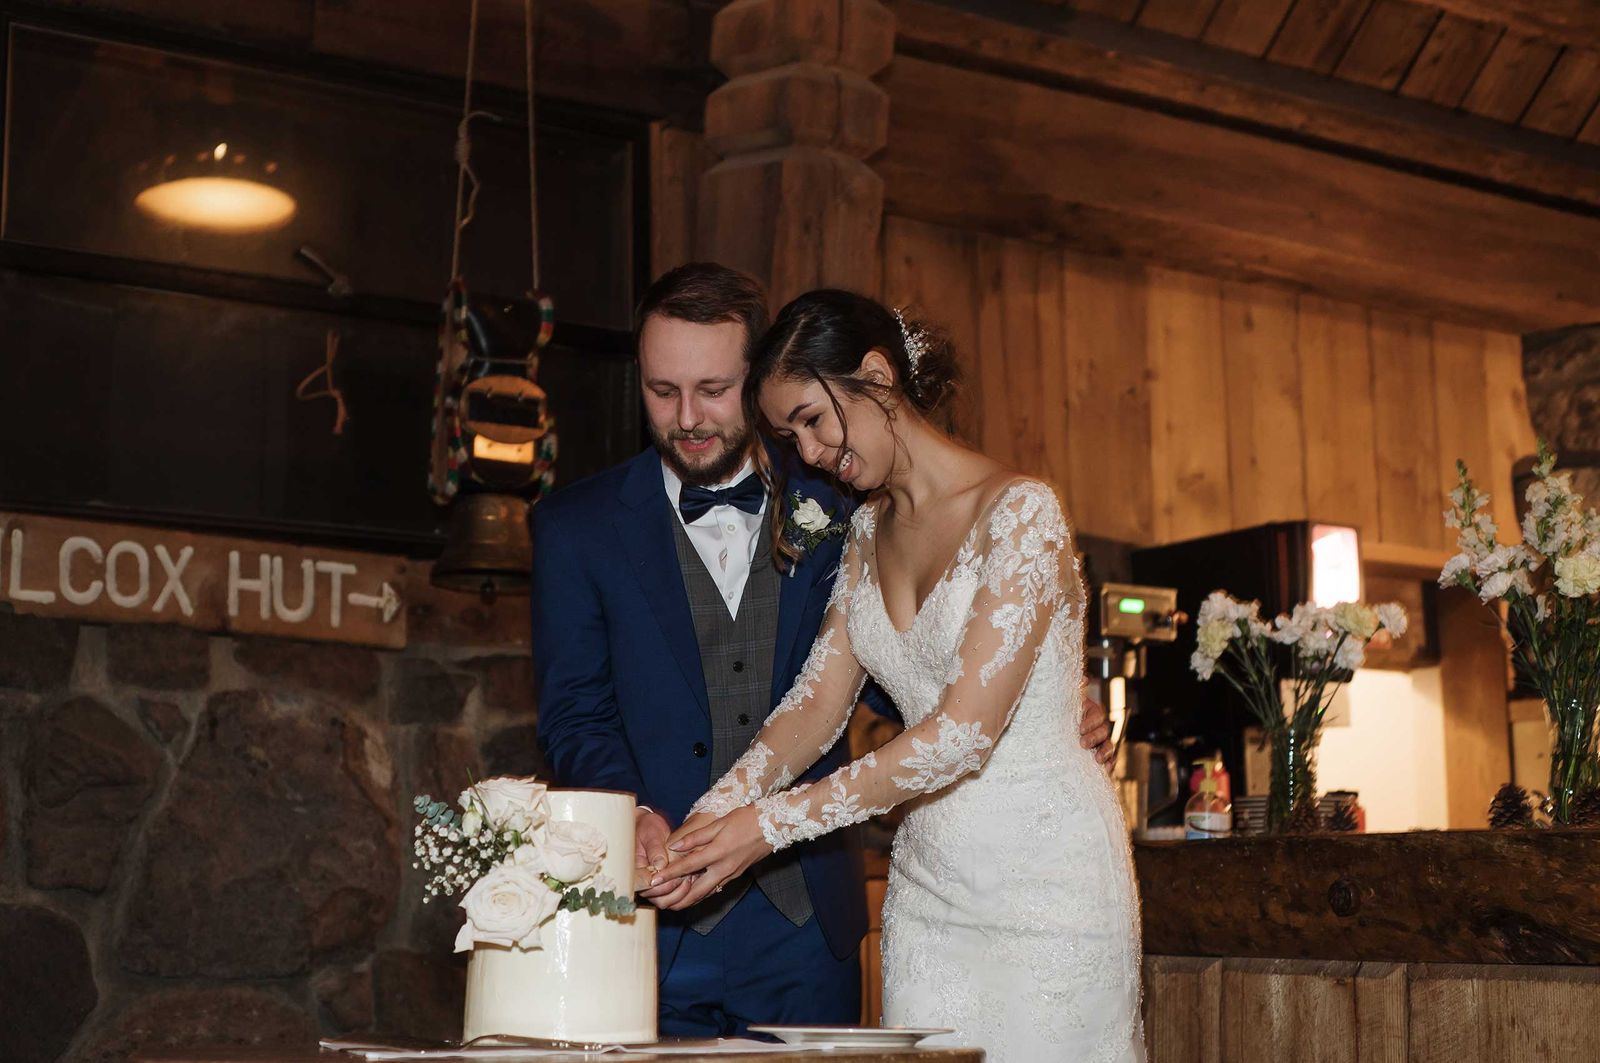 Silcox-Hut-wedding-reception-cakecutting.jpg